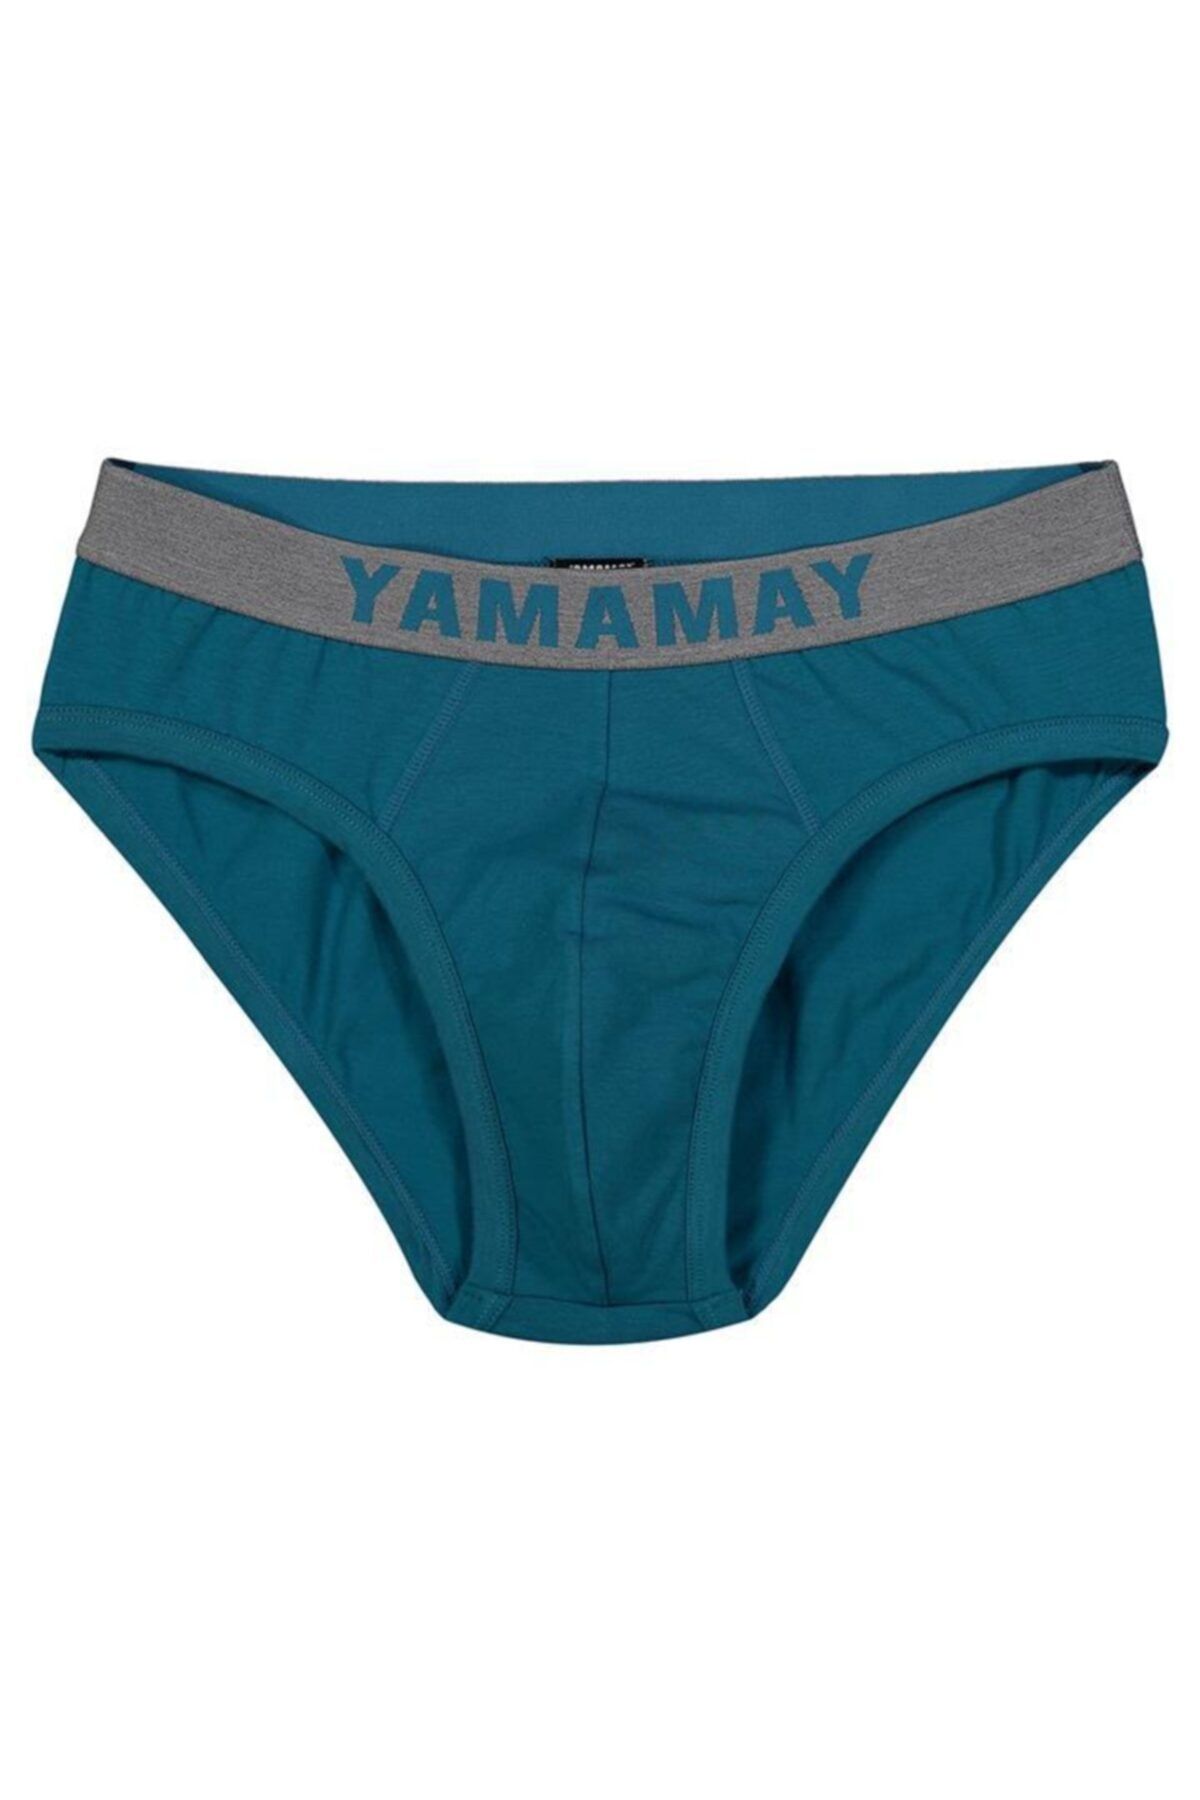 Yamamay Slip Boxer